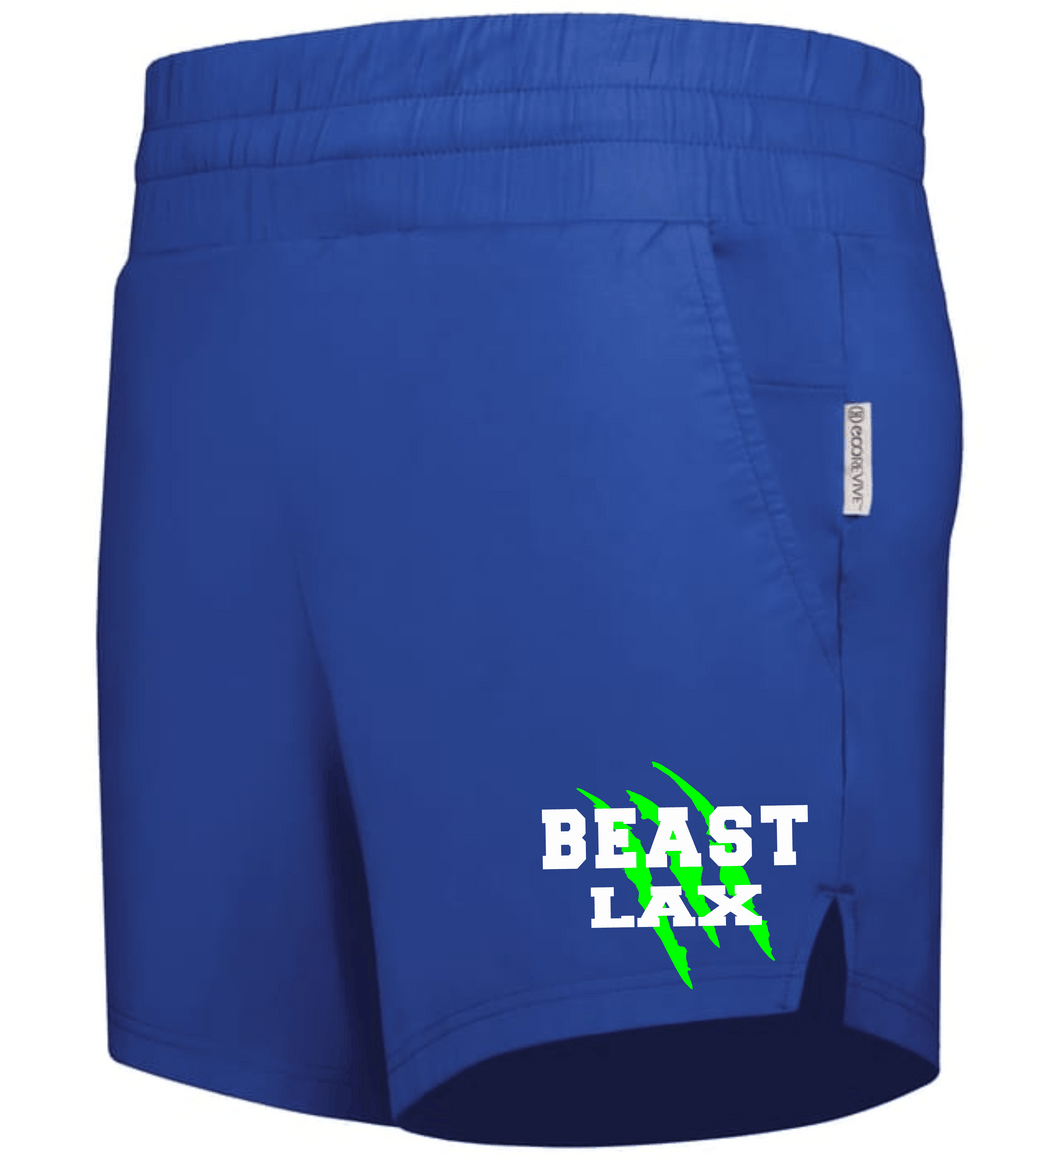 BEAST-LAX-728-2 - Holloway Ladies Ventura Soft Knit Shorts (5 Inch Inseam) - BEAST LAX Logo